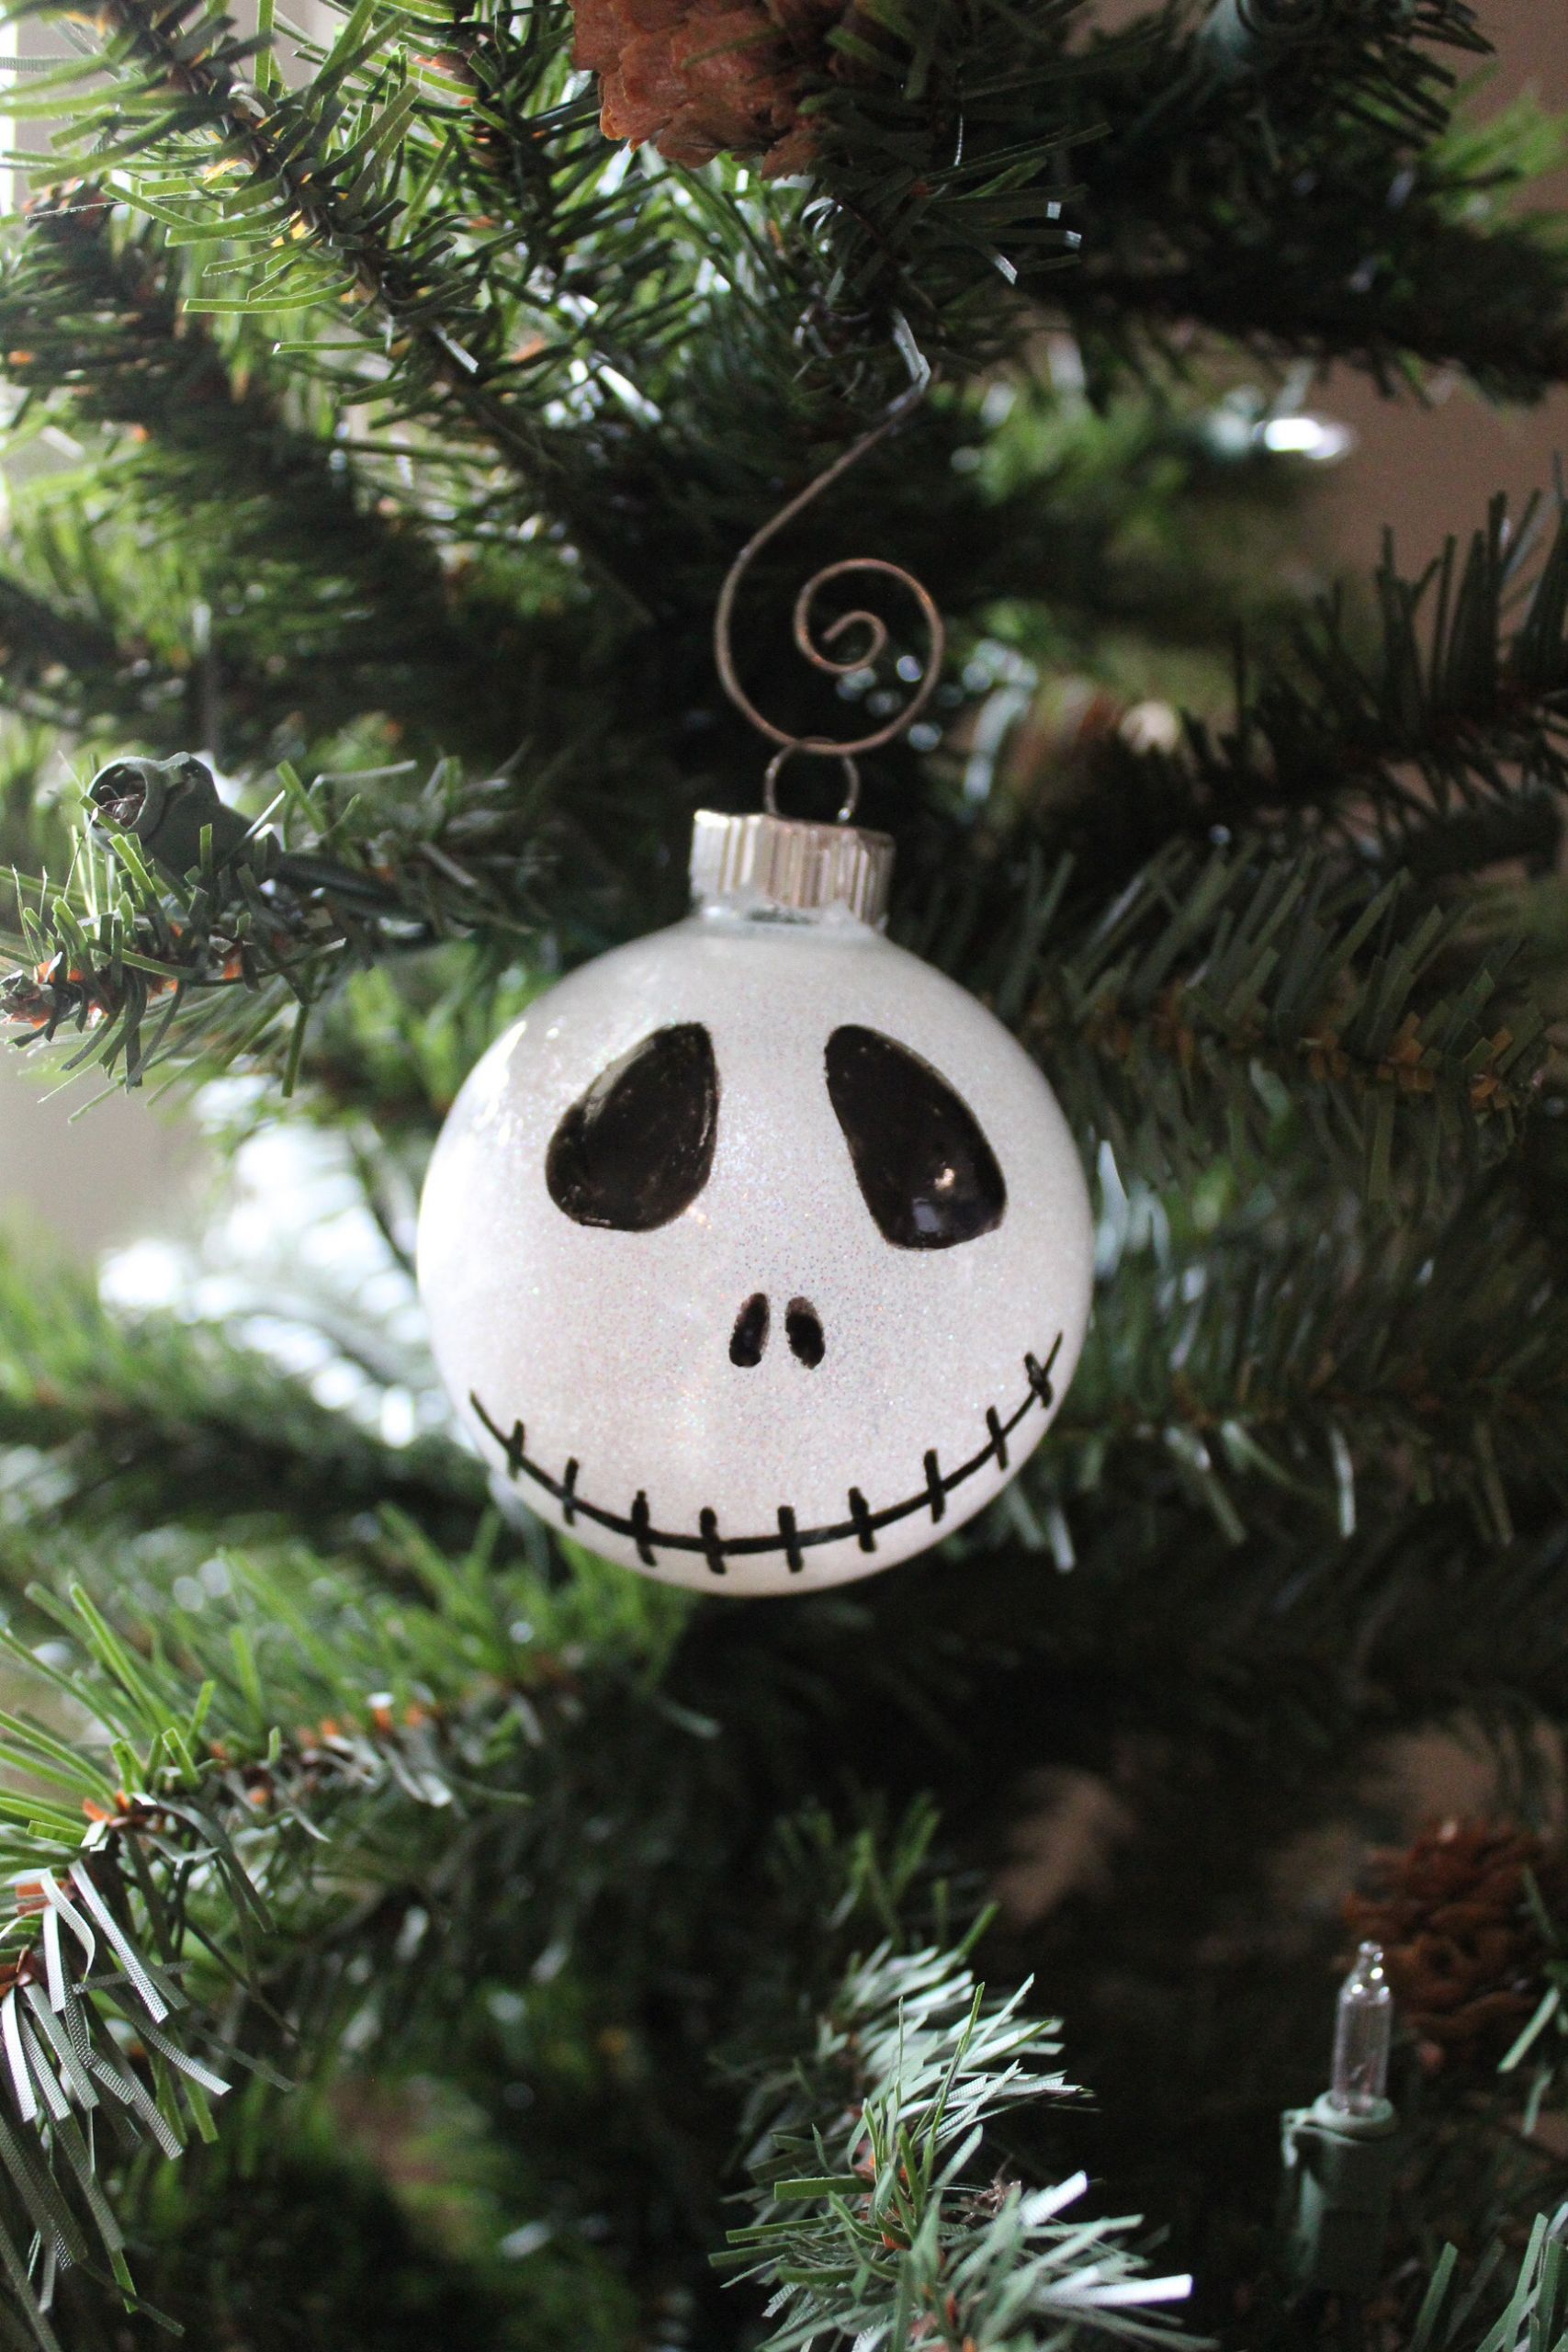 Nightmare Before Christmas Ornaments DIY
 DIY Jack Skellington Ornament from The Nightmare Before